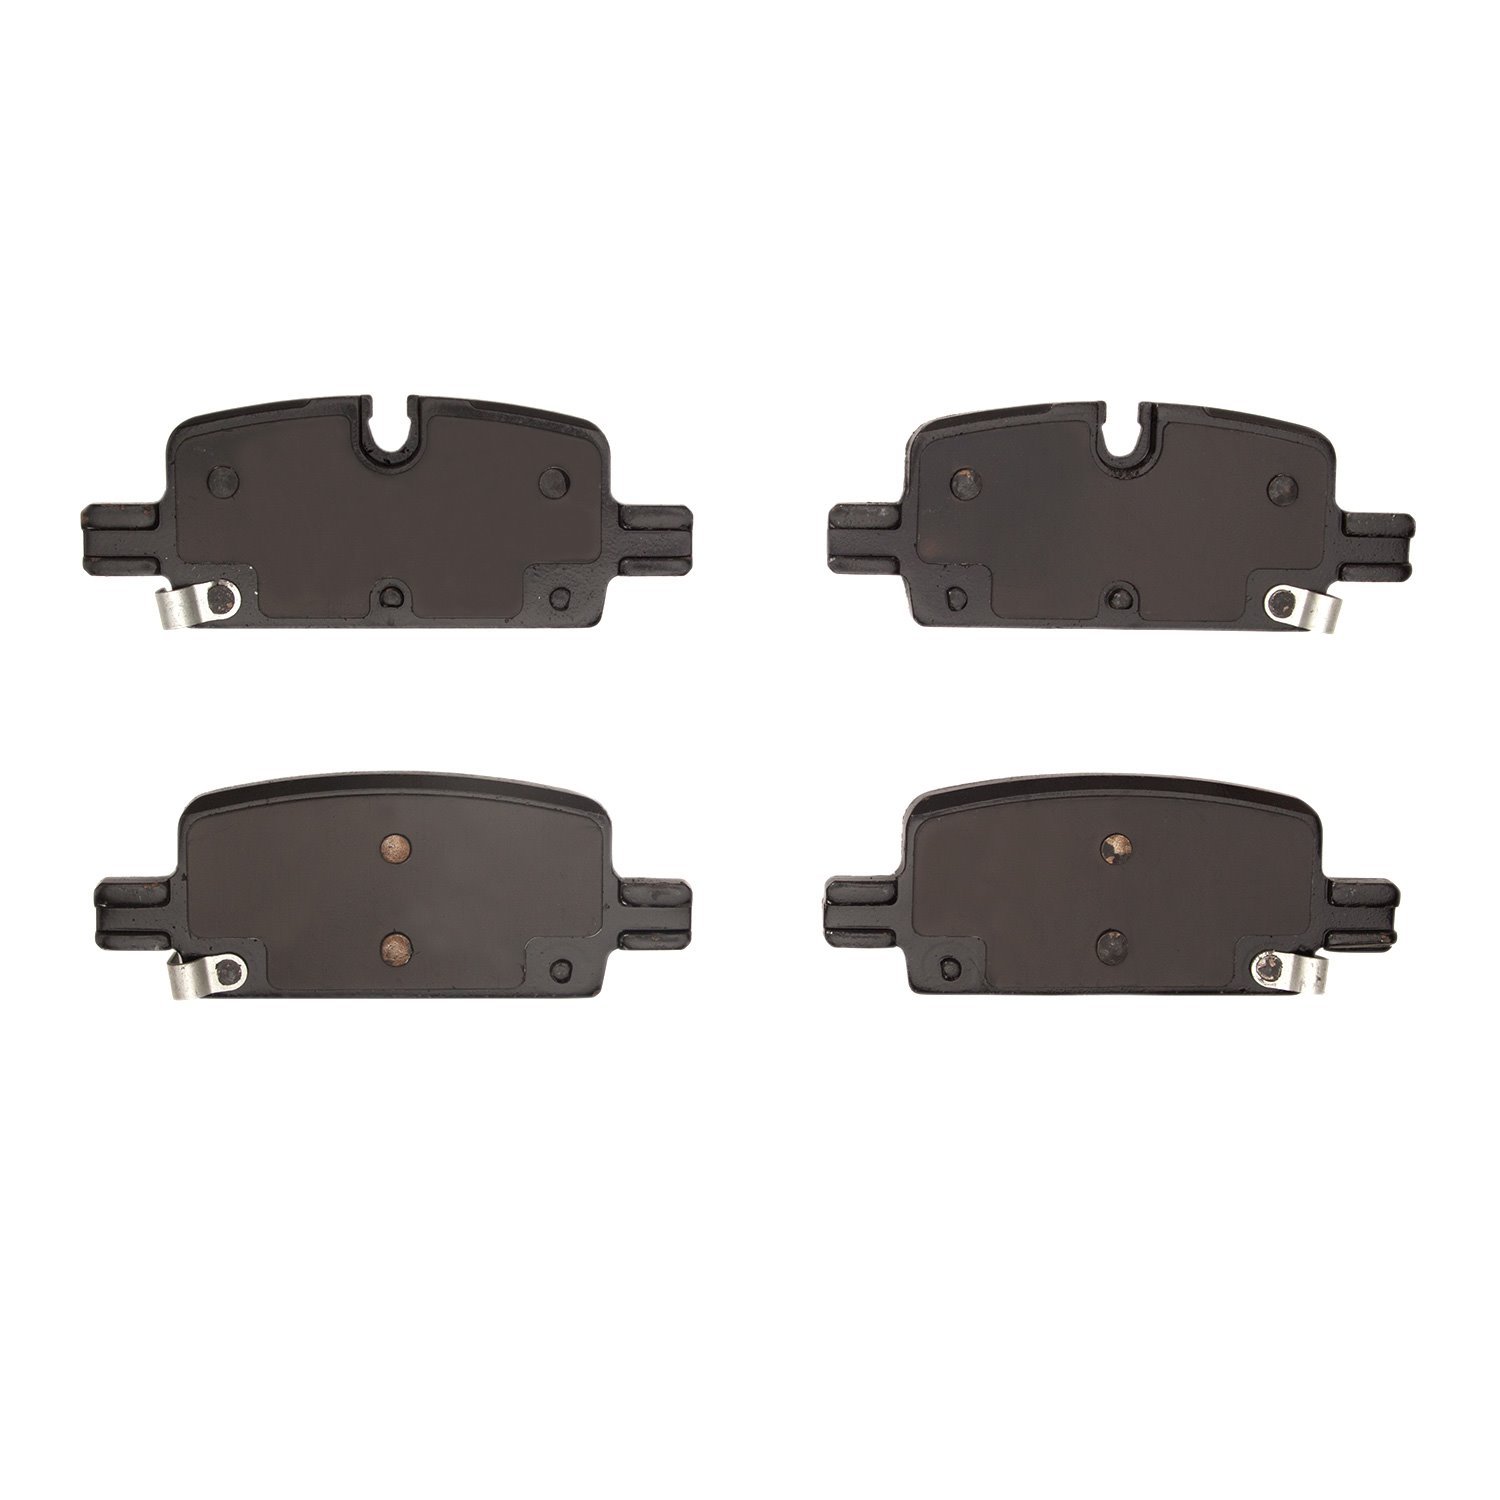 1551-2174-00 5000 Advanced Ceramic Brake Pads, Fits Select Multiple Makes/Models, Position: Rear,Rr